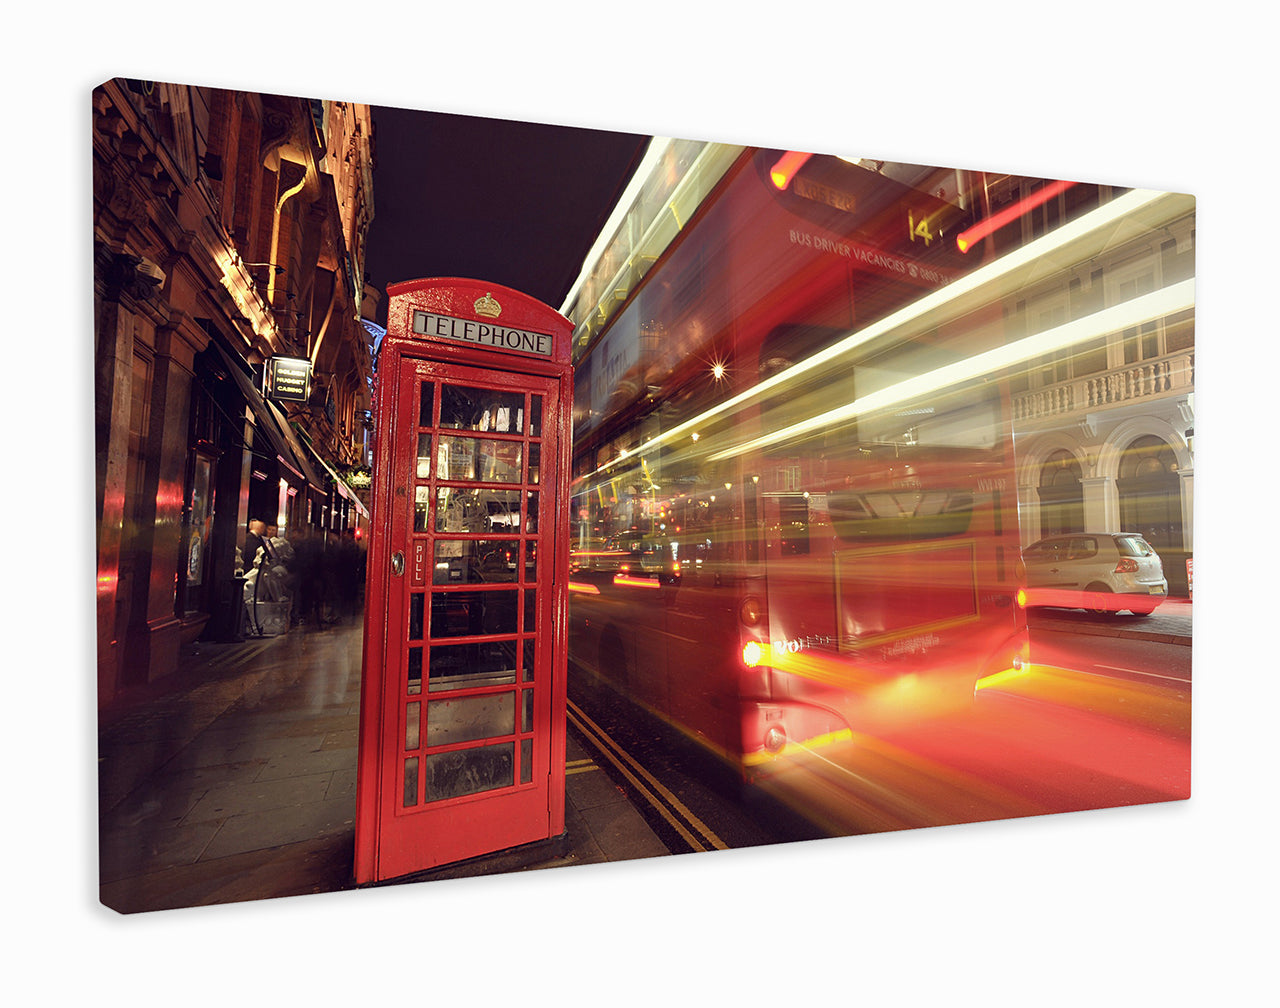 Londons telephone box